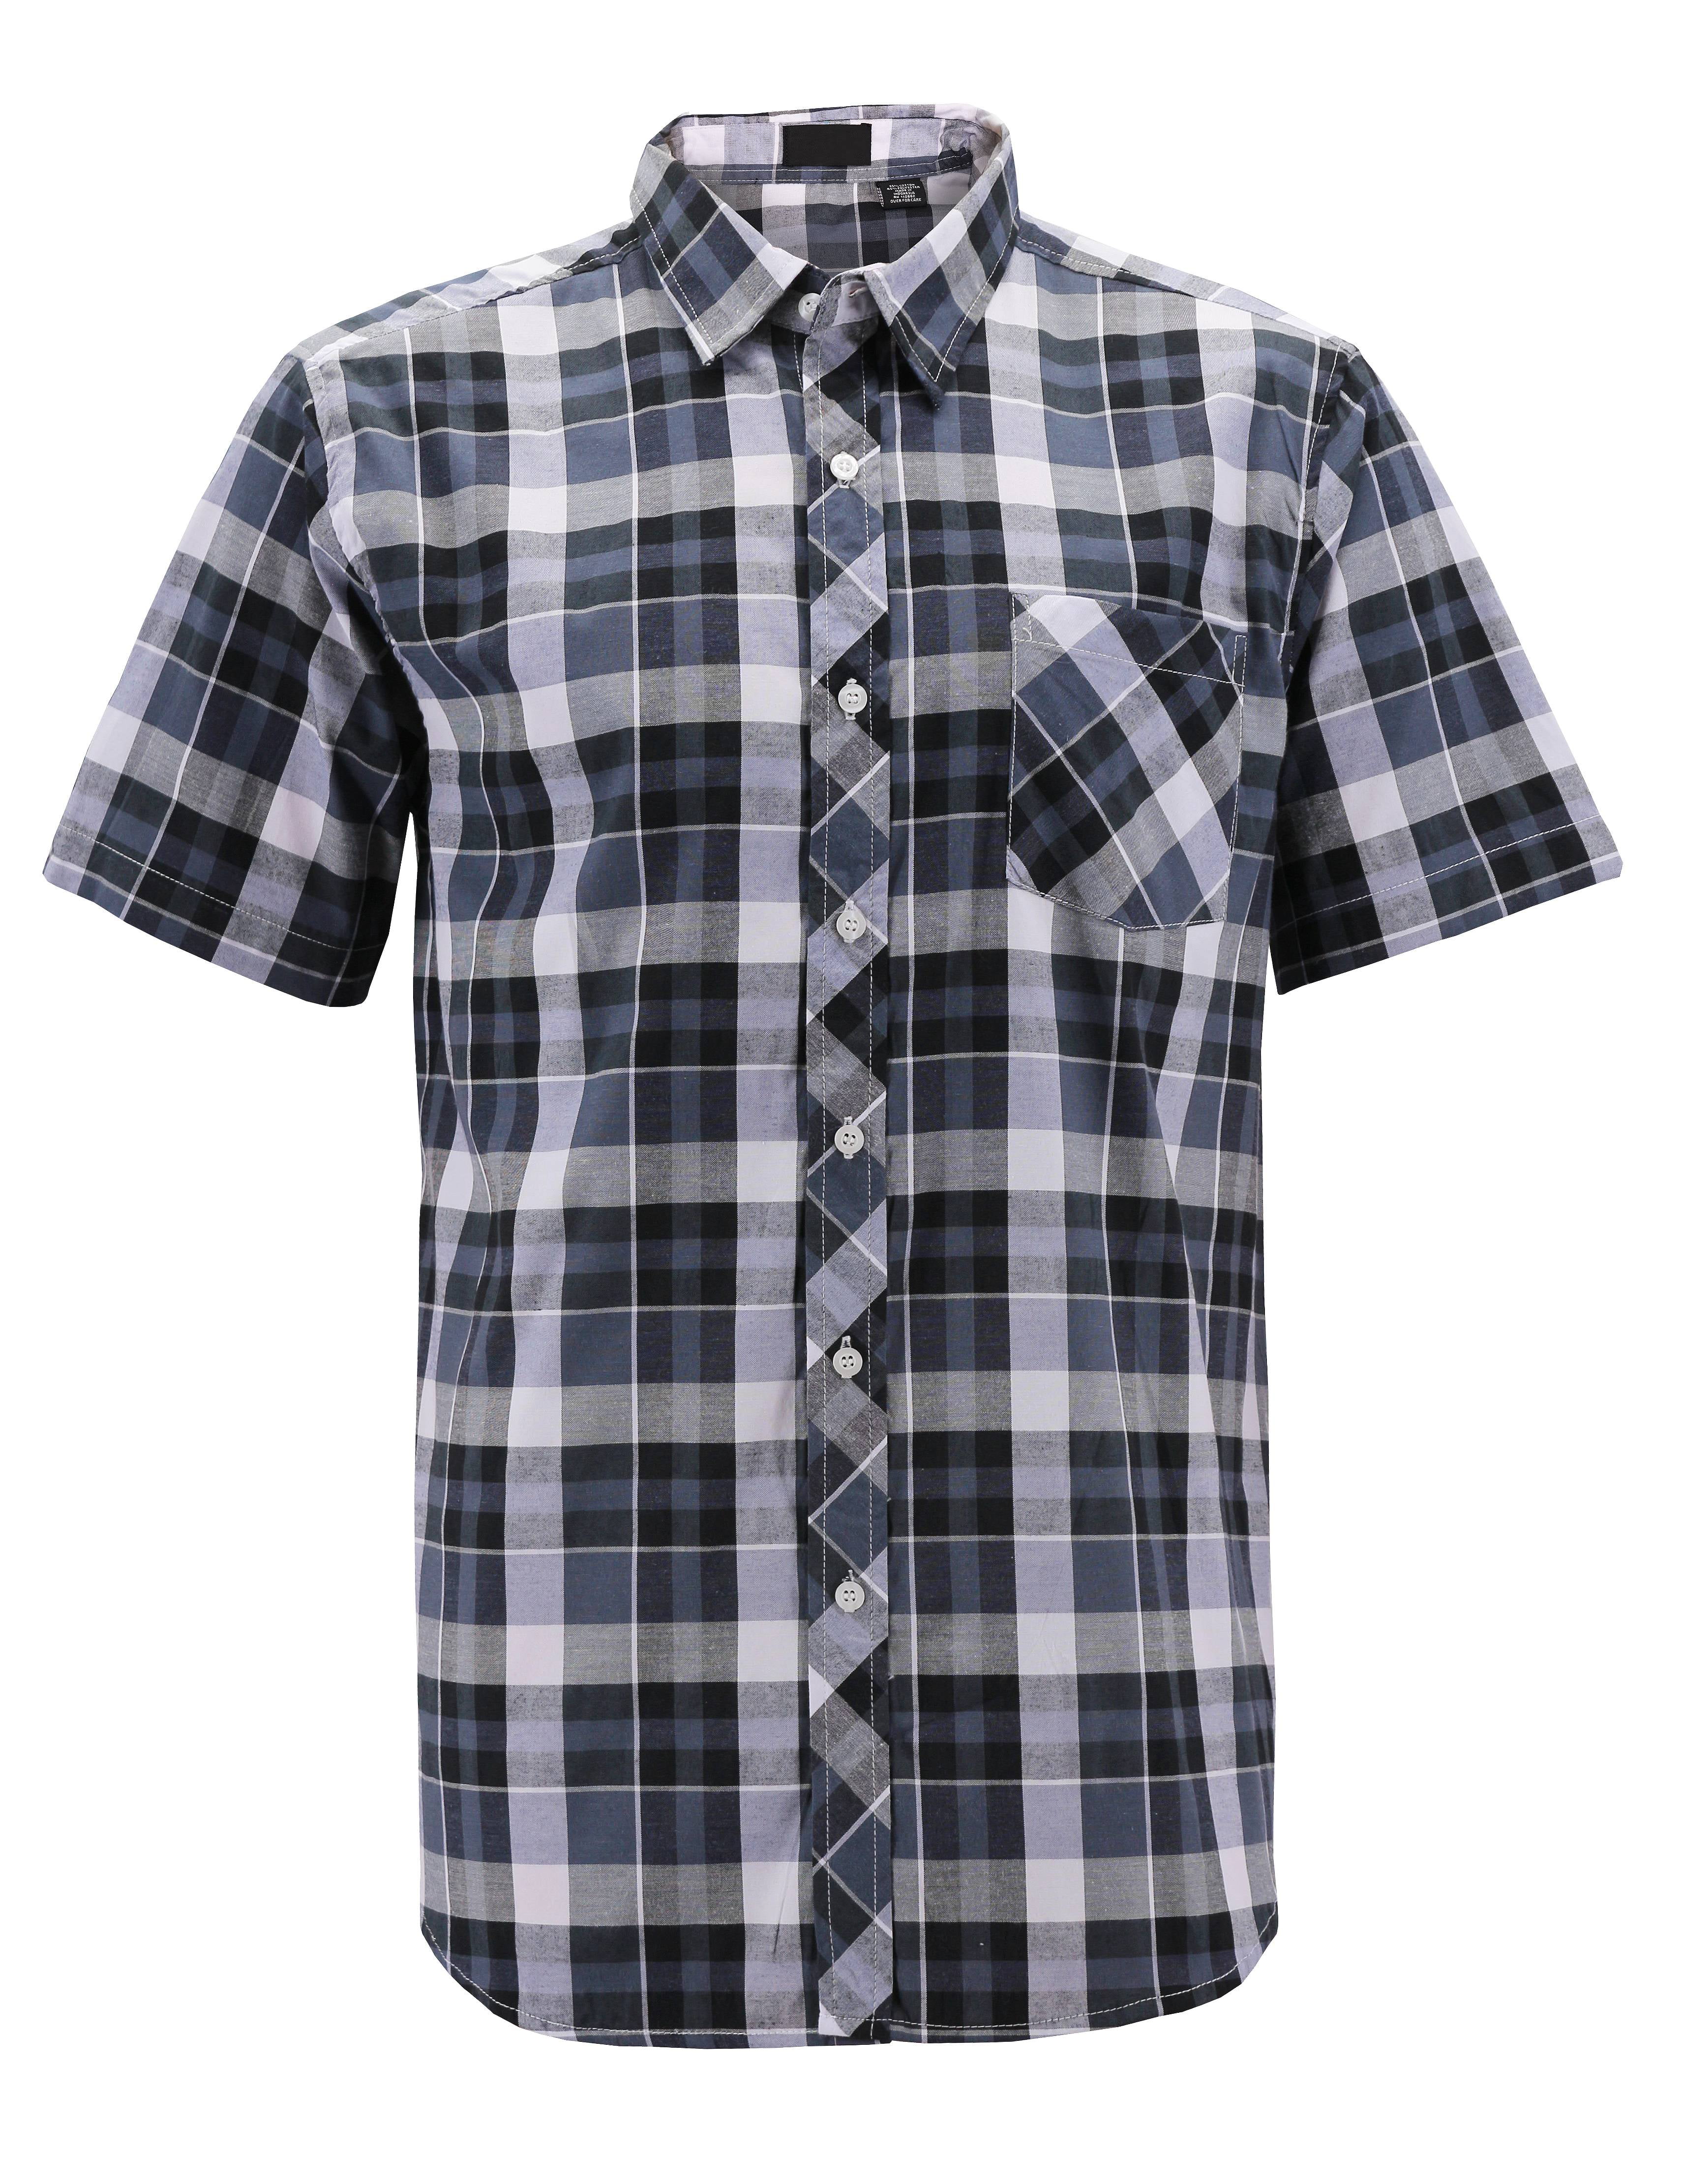 i5 Apparel - Men's Plaid Checkered Button Down Casual Short Sleeve ...